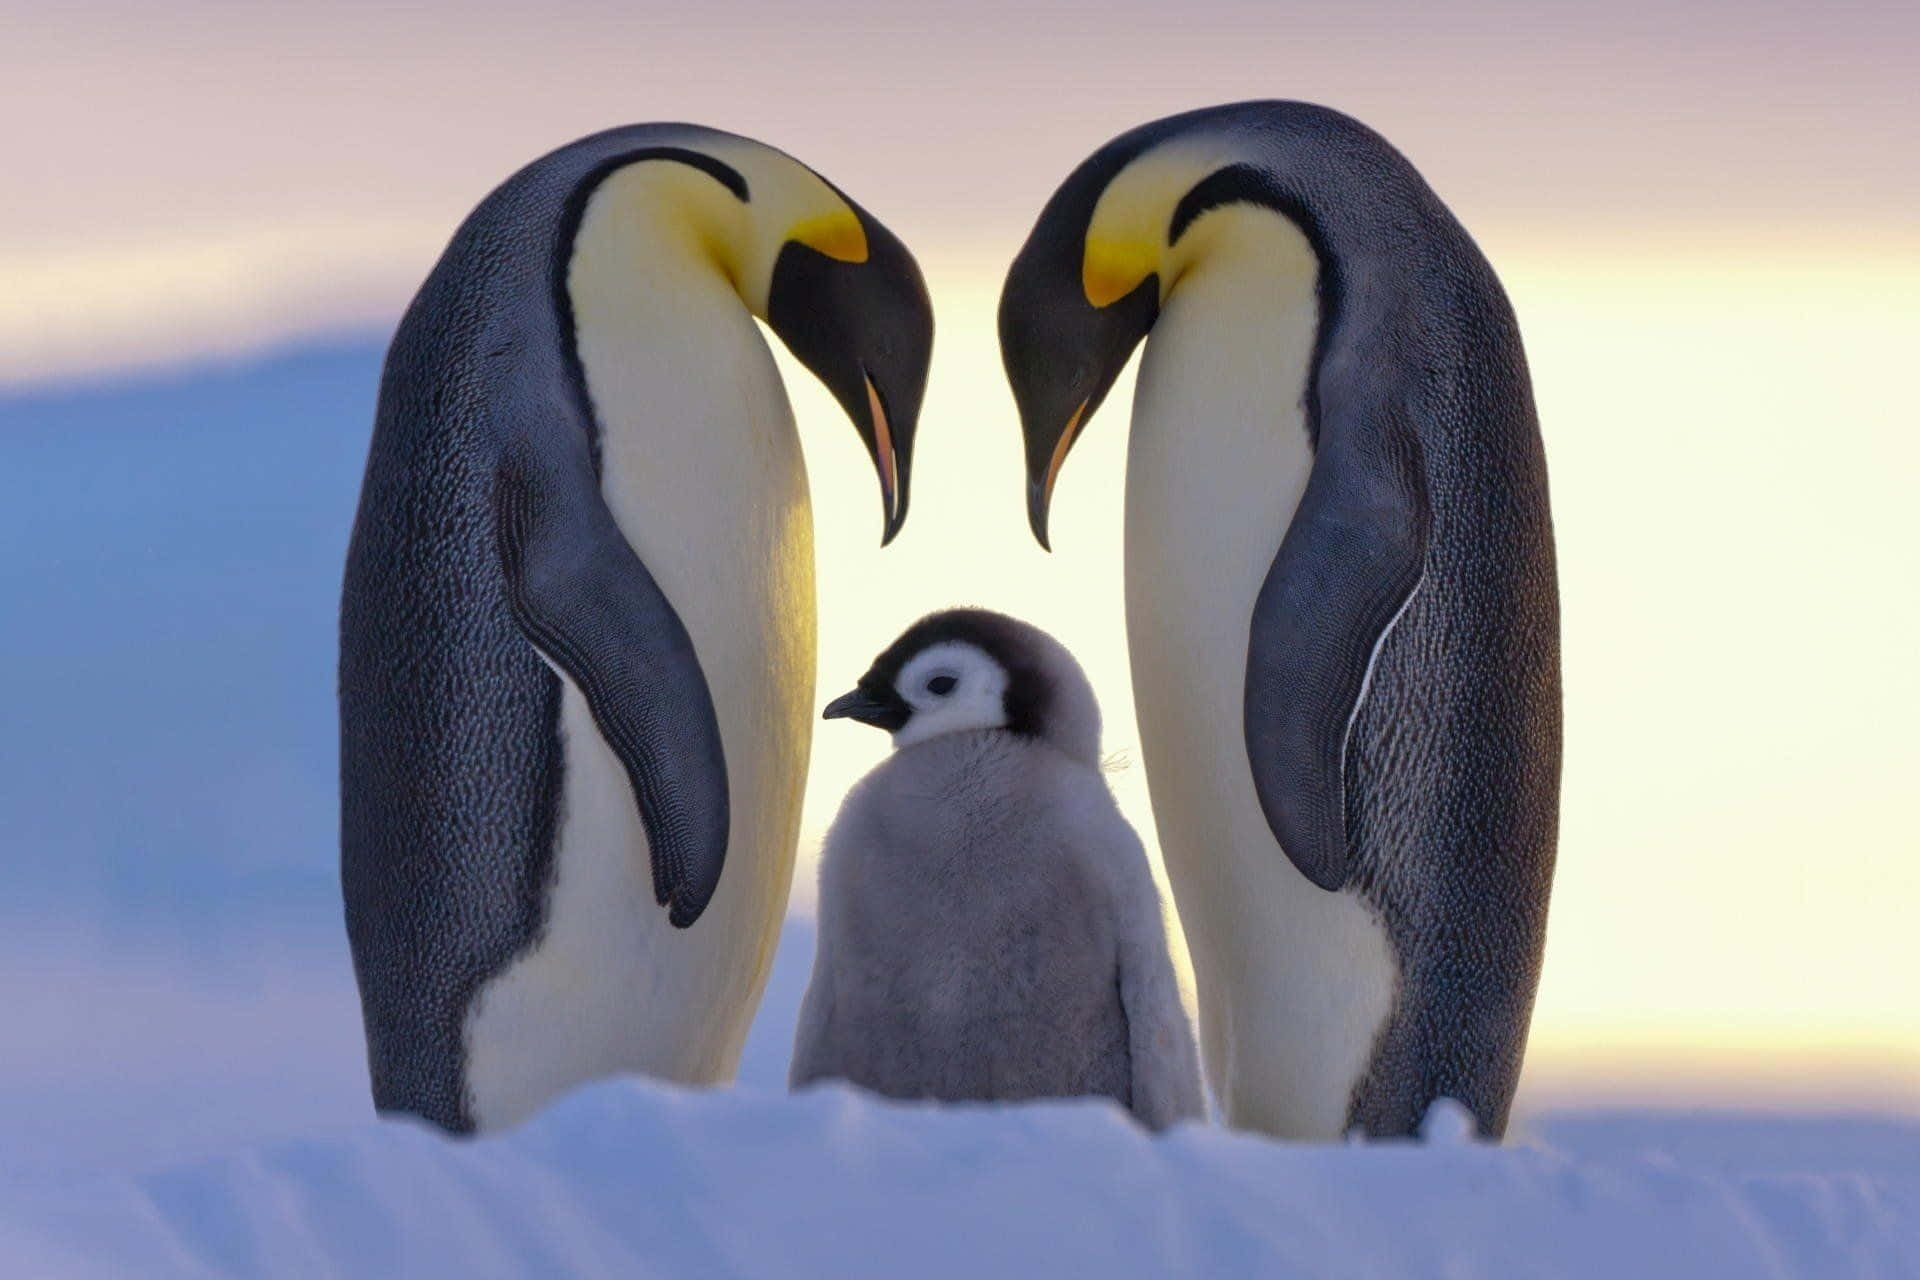 An adorable baby penguin stares curiously!